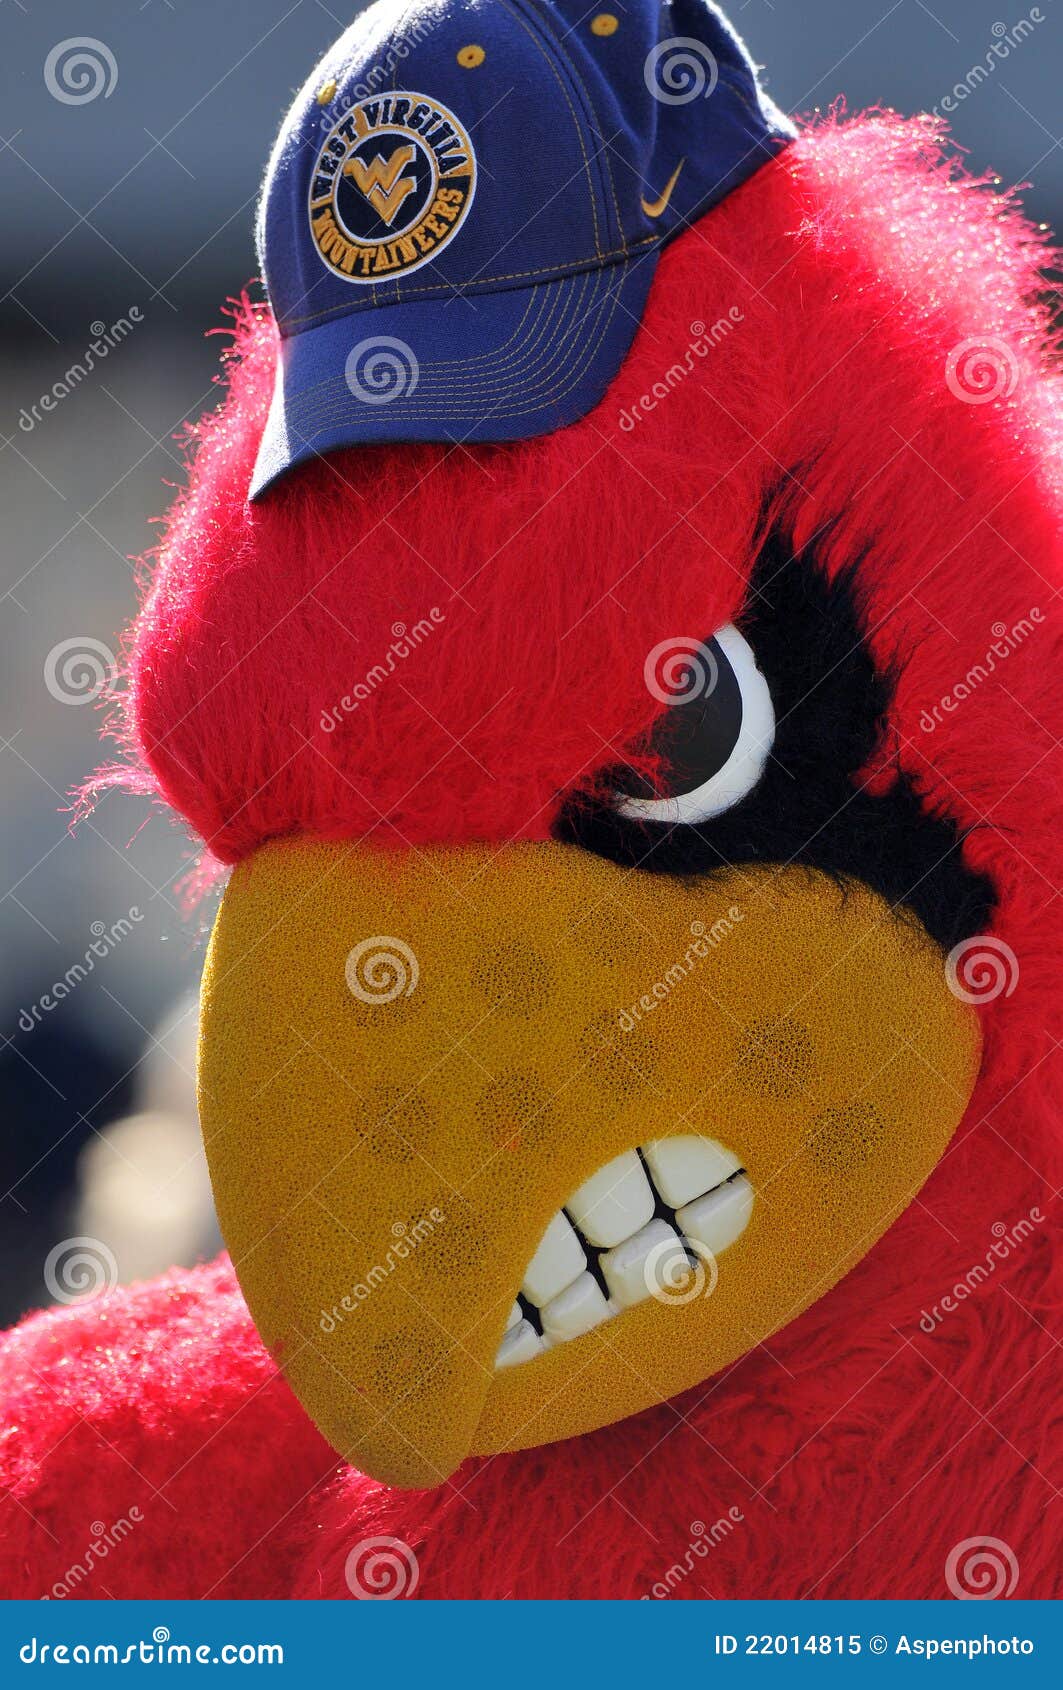 Louisville Kentucky Pronunciations Stock Photo - Image of colorful,  cardinals: 69378982